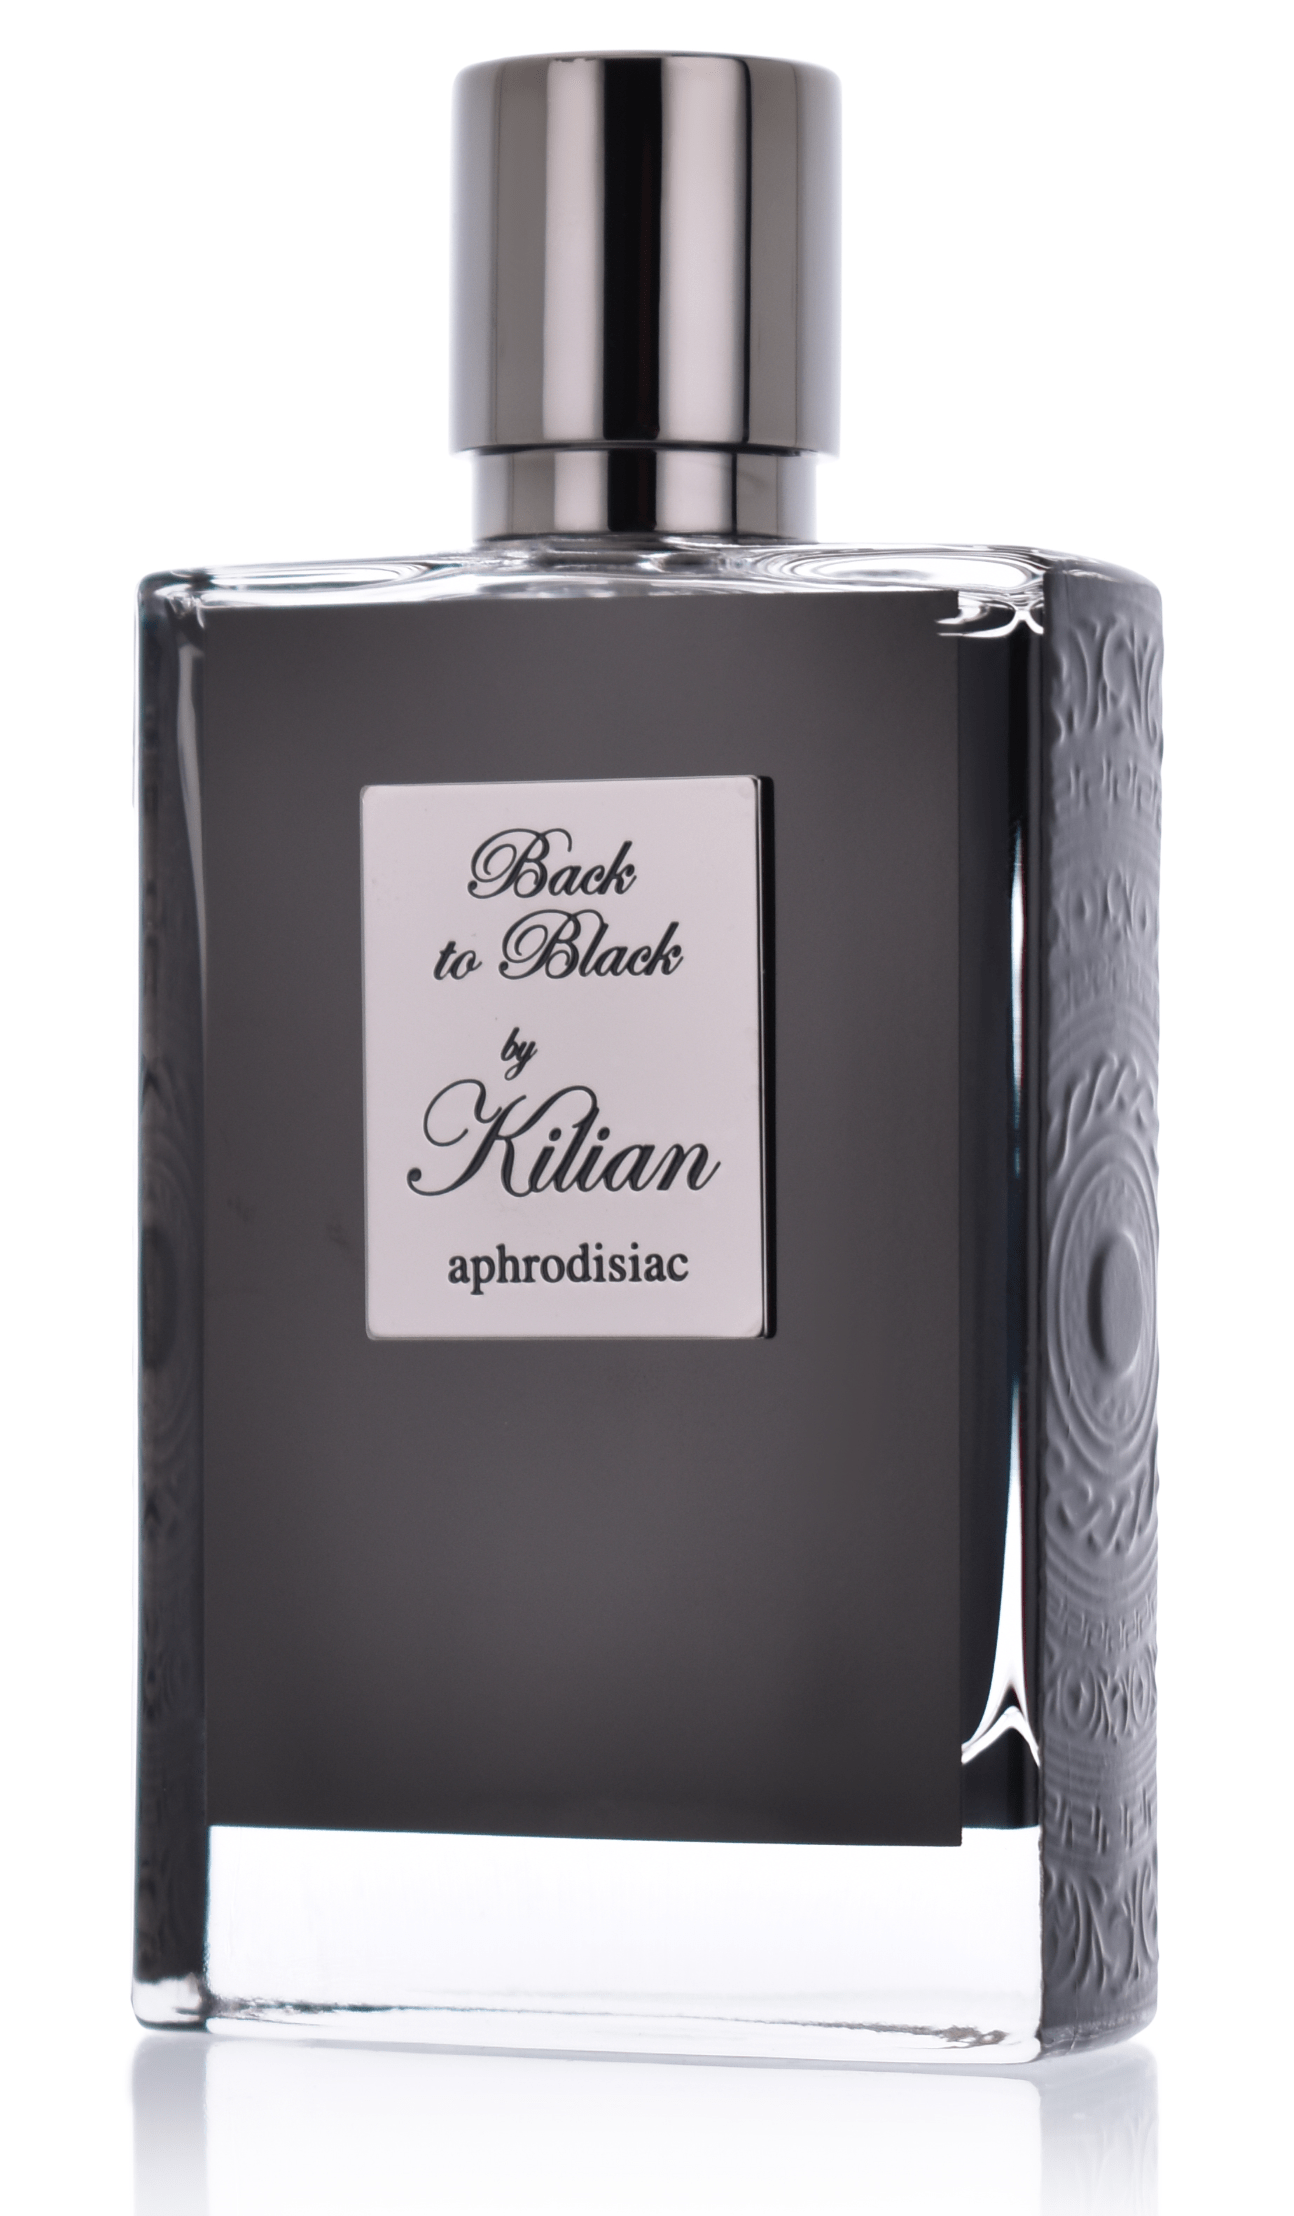 Kilian Back to Black aphrodisiac 5 ml Eau de Parfum Abfüllung